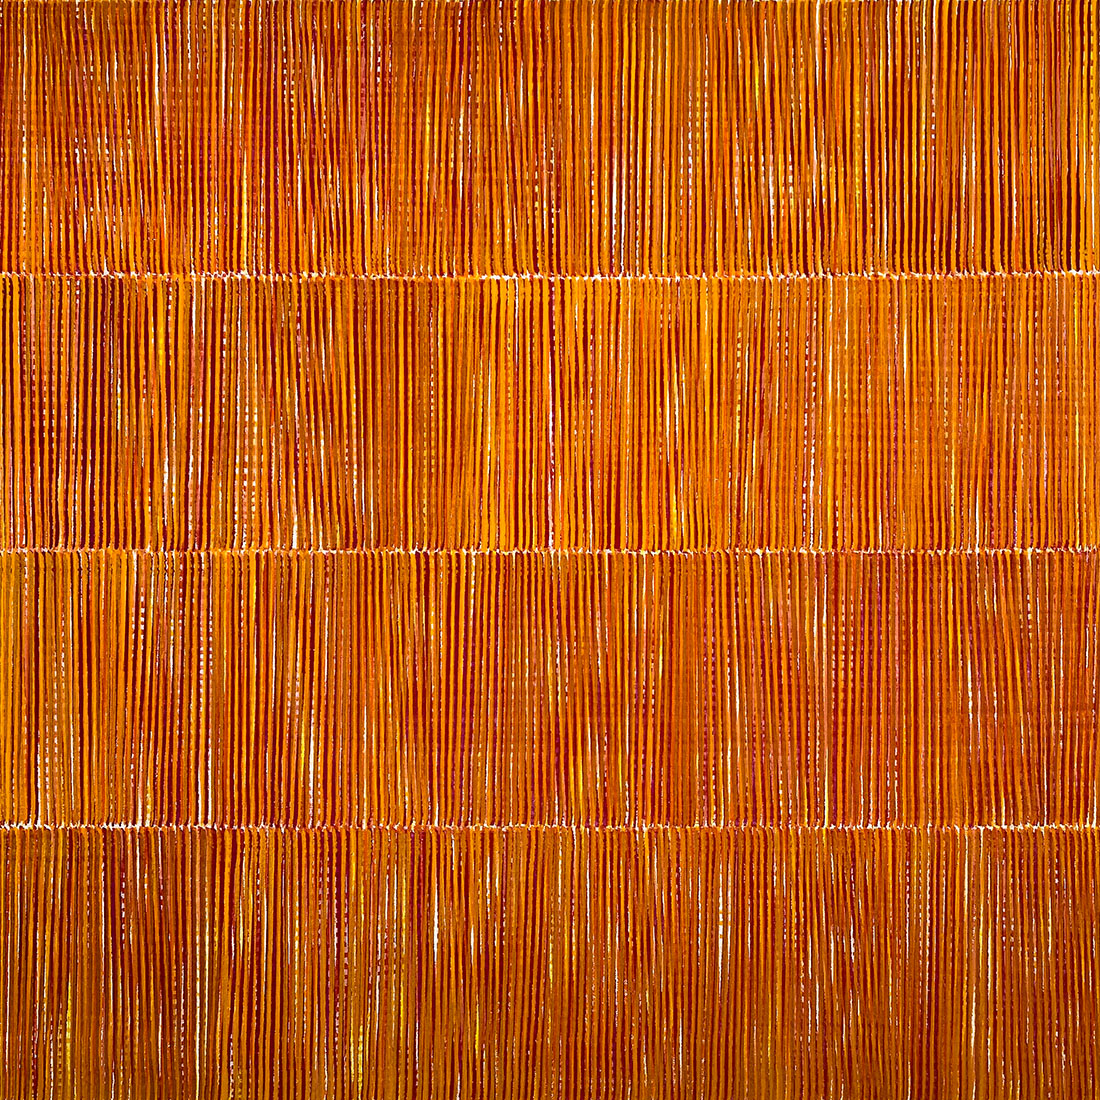 Nikola Dimitrov, FarbKlang Rot III, 2021, Pigmente, Bindemittel auf Leinwand, 80 × 80 cm